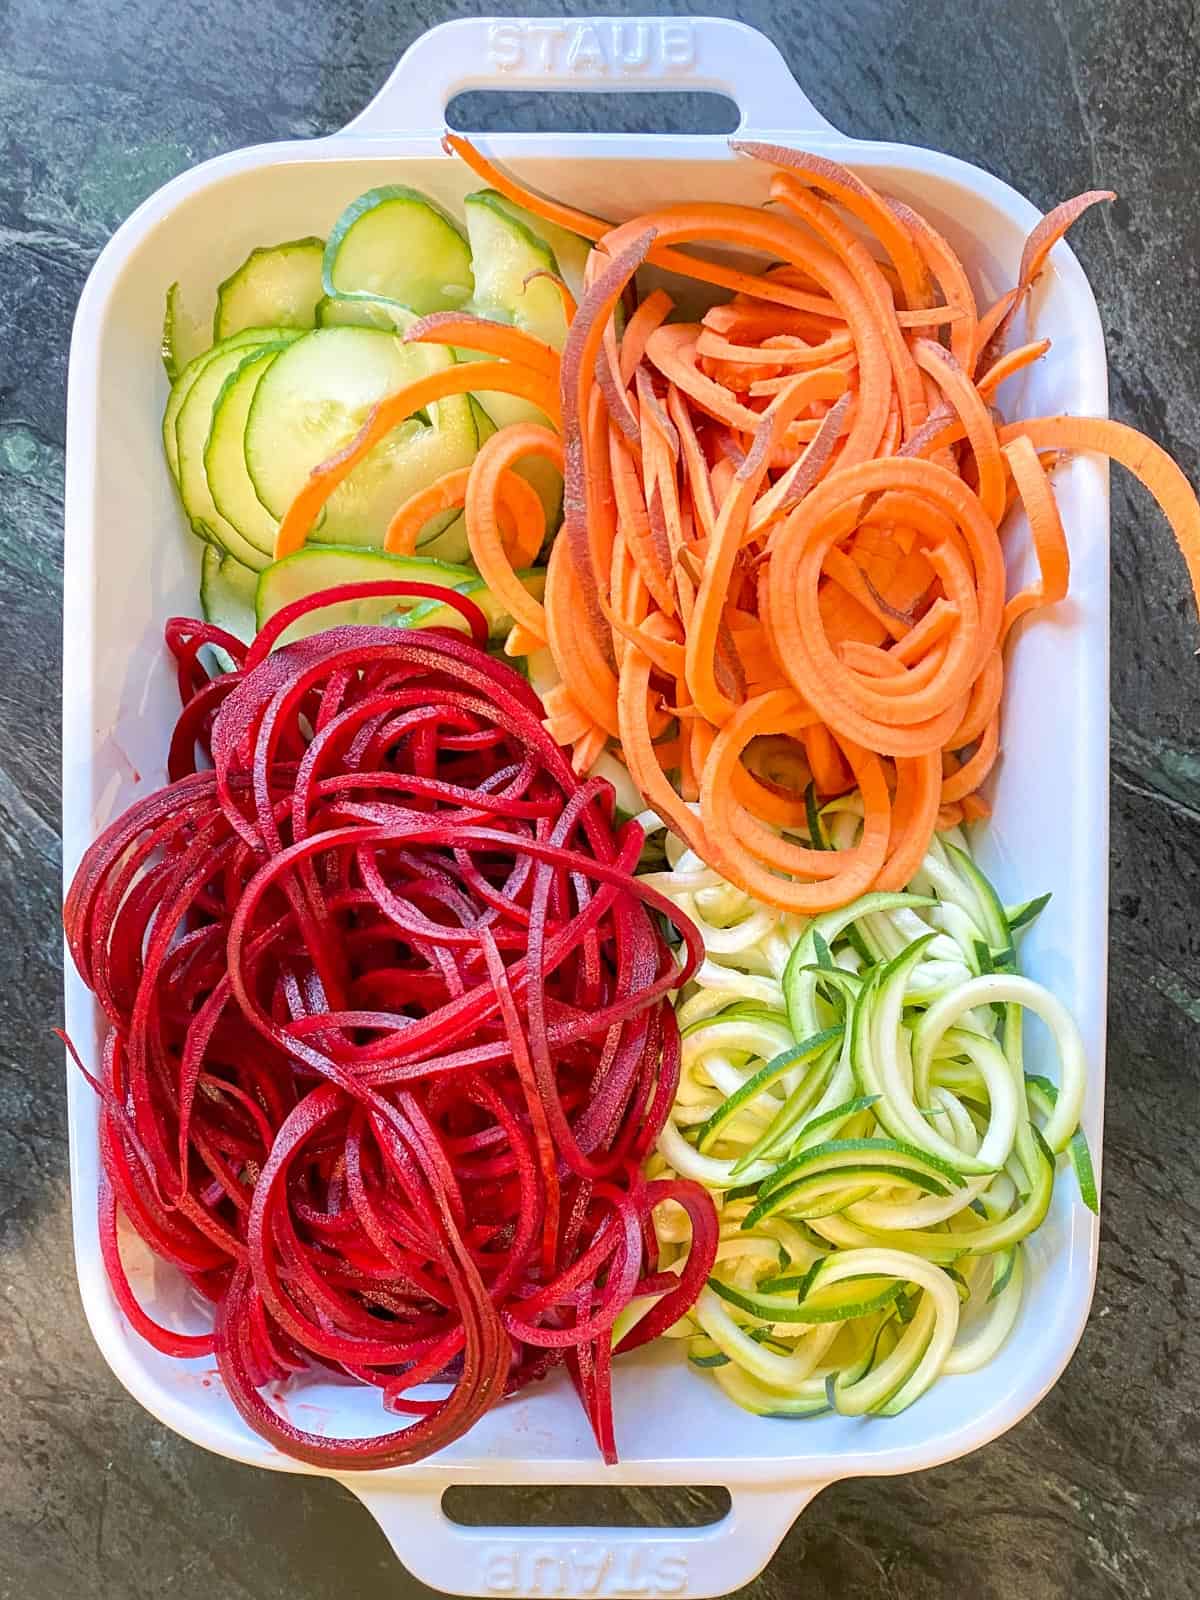 https://www.foodologygeek.com/wp-content/uploads/2021/10/spiralized-vegetables-featured.jpg